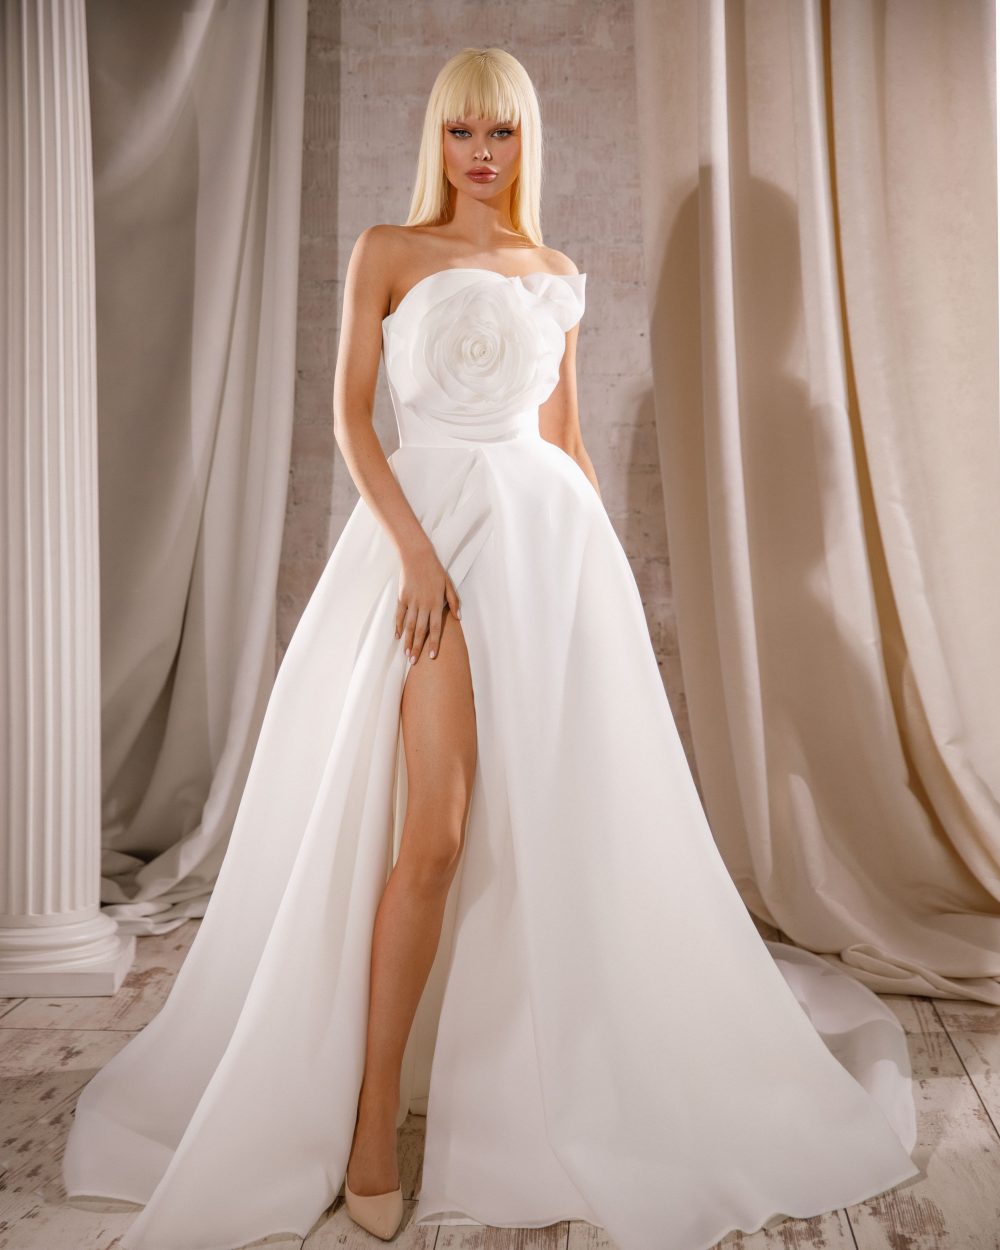 Свадебное платье Strekoza Олимпия